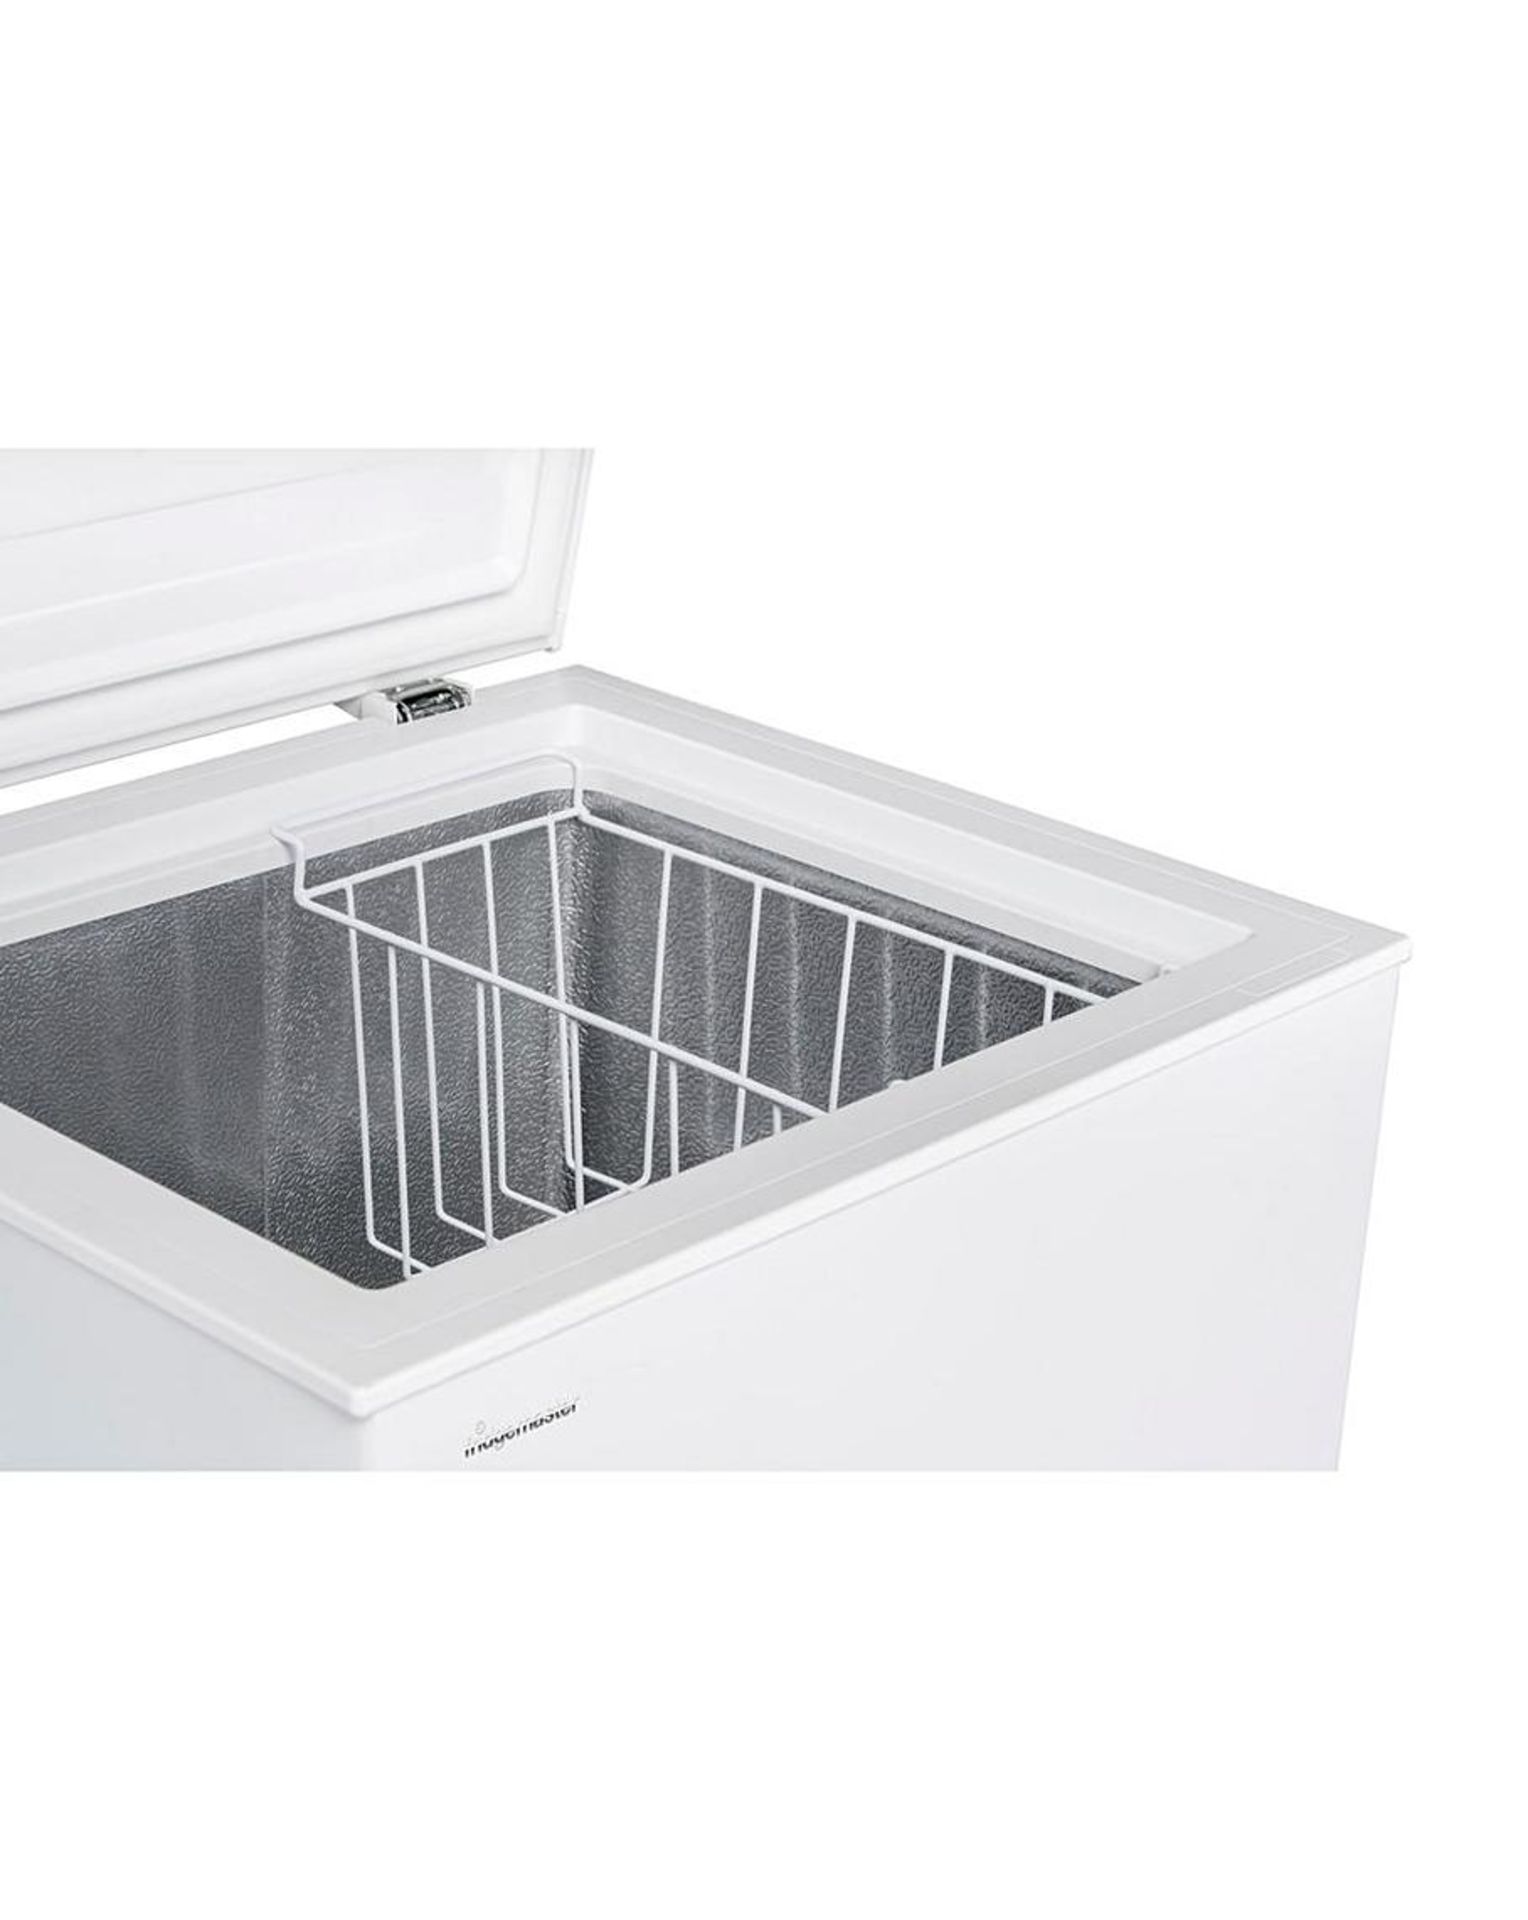 Fridgemaster MCF96 Chest Freezer - White. - SR4. 95 litre capacity - holds 5 bags of food - Image 2 of 2